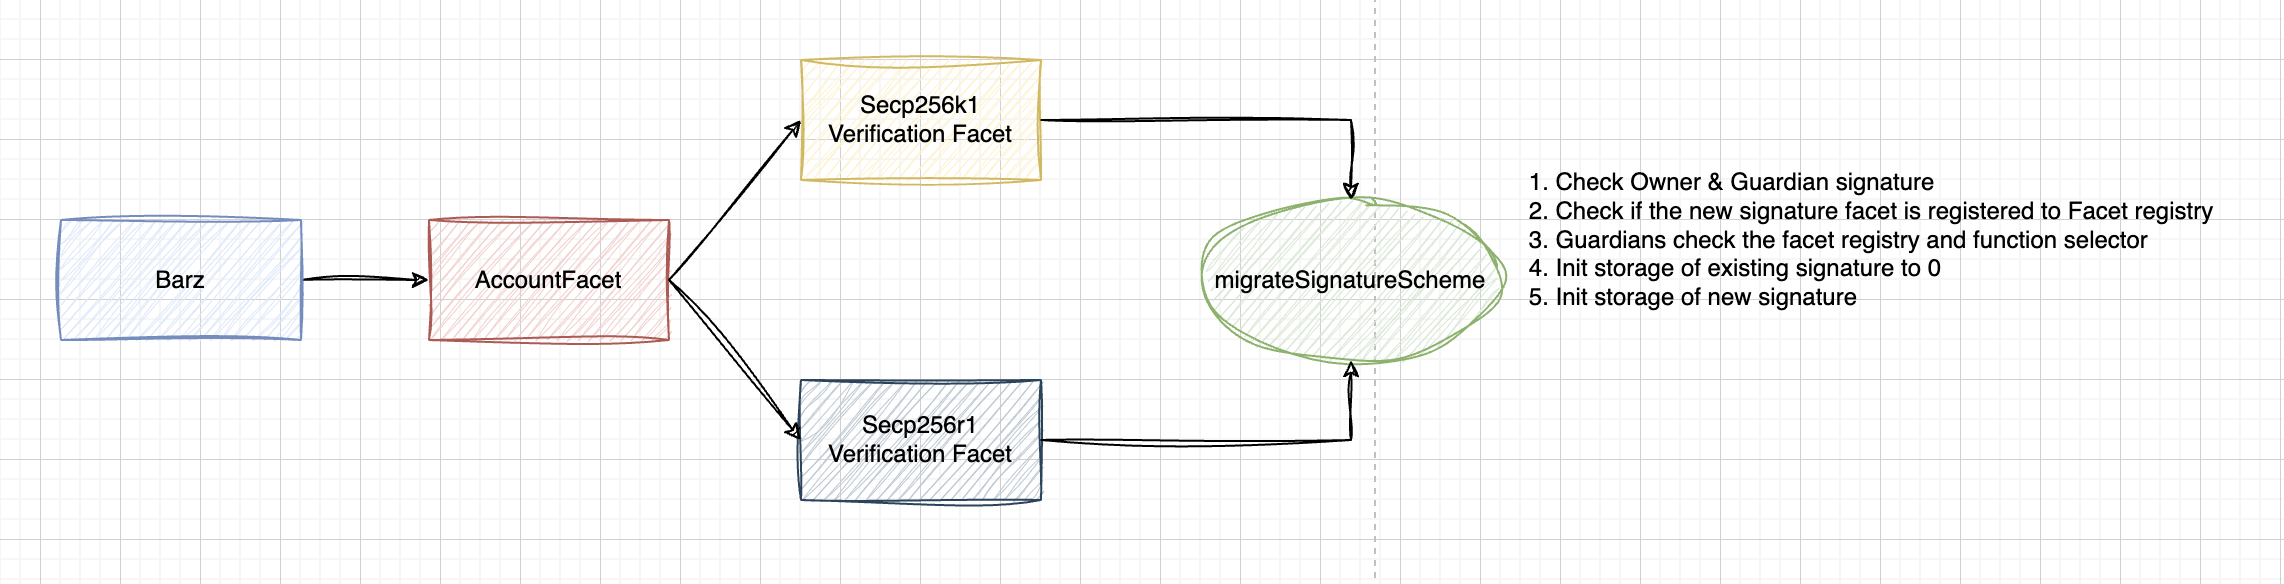 Barz Modular Signature Architecture